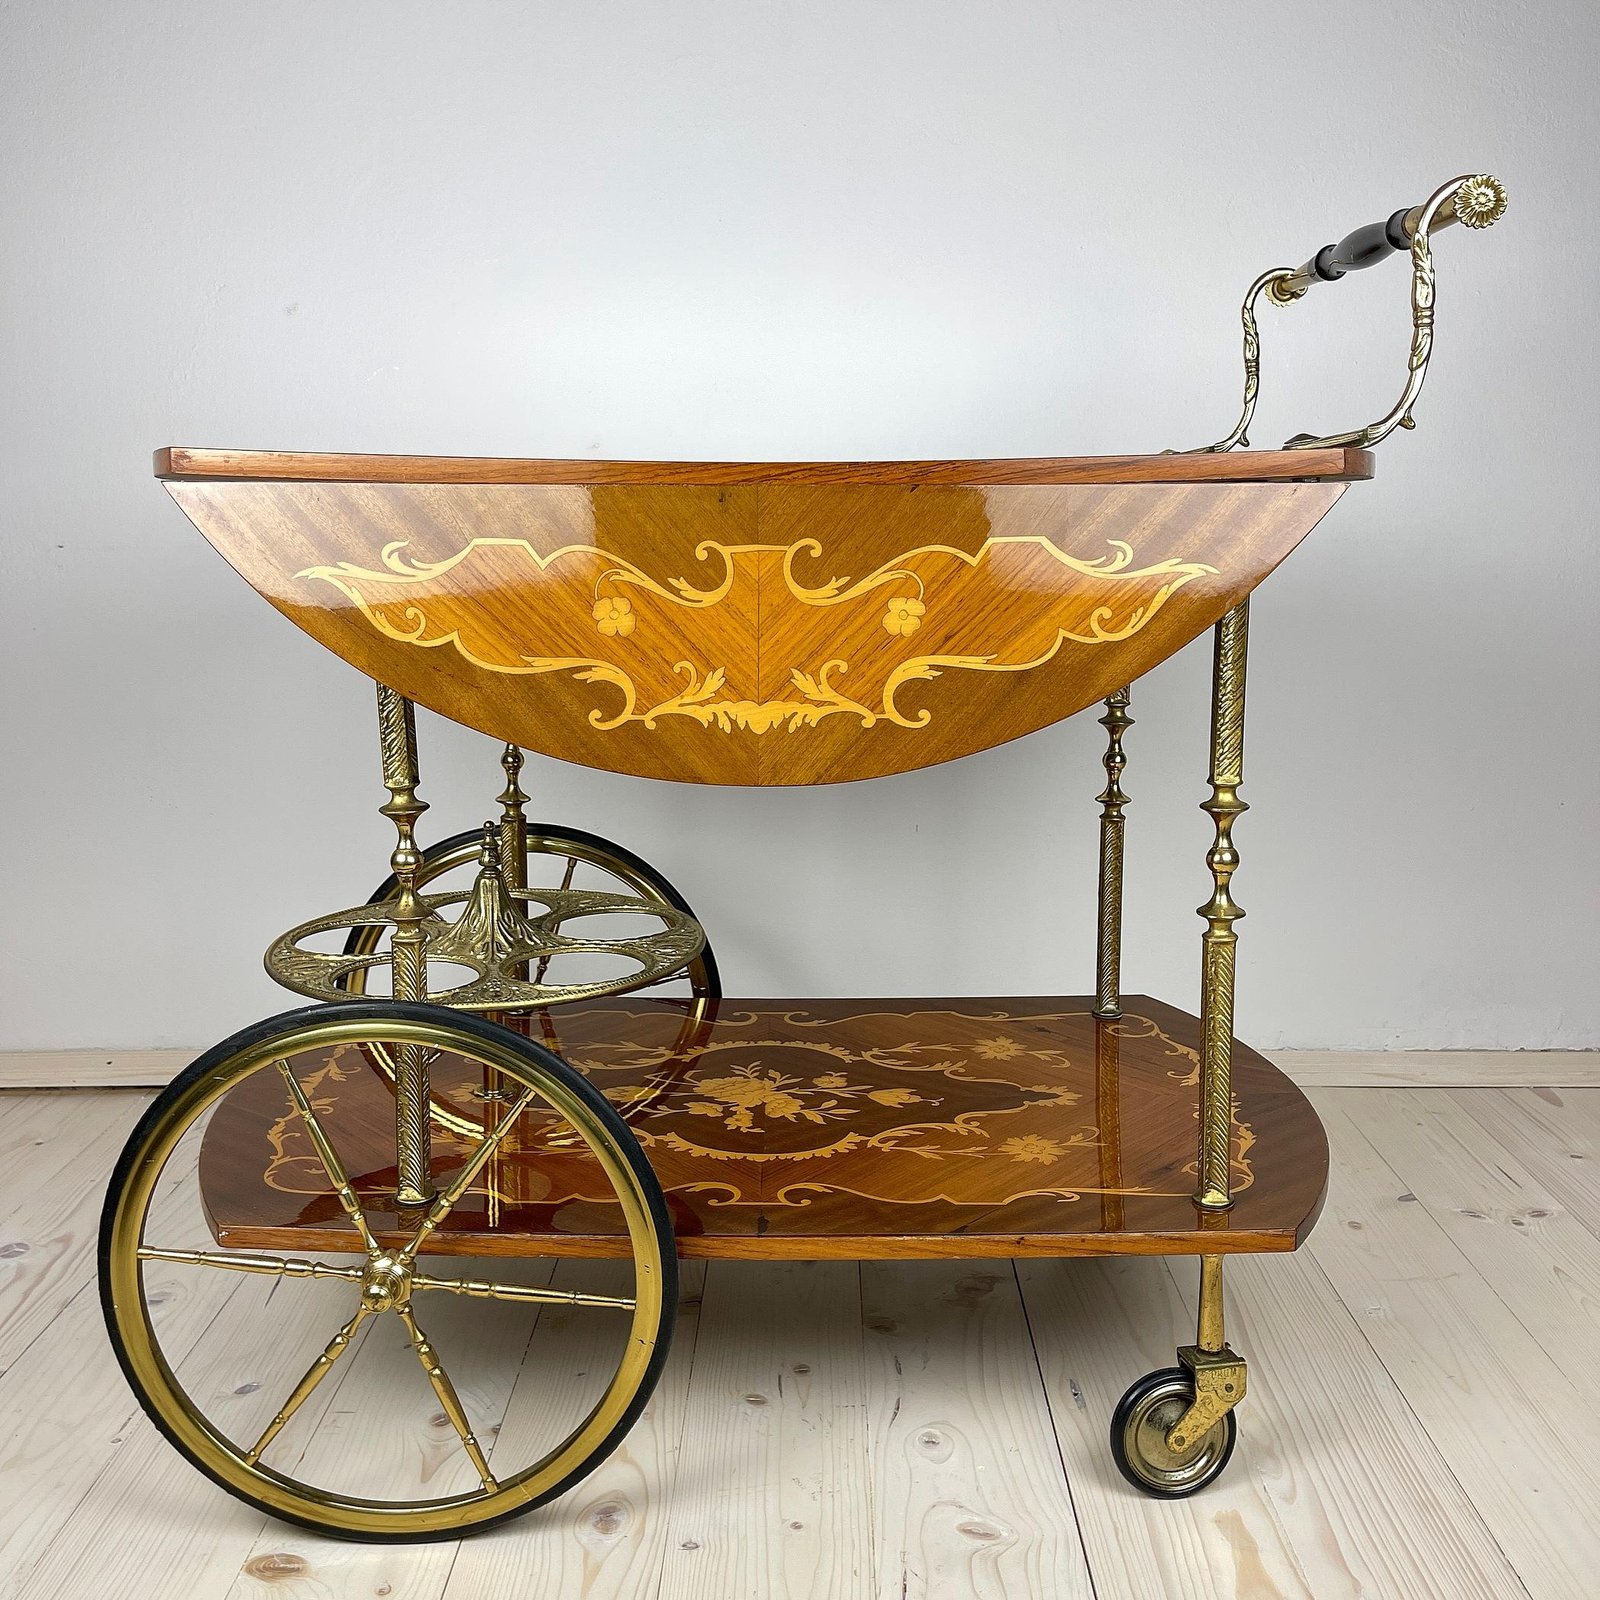 Vintage Serving Bar Cart Italy 1950s Mid-century trolley bar Brass Bar Wagon Drinks Trolley Hollywood Regency style